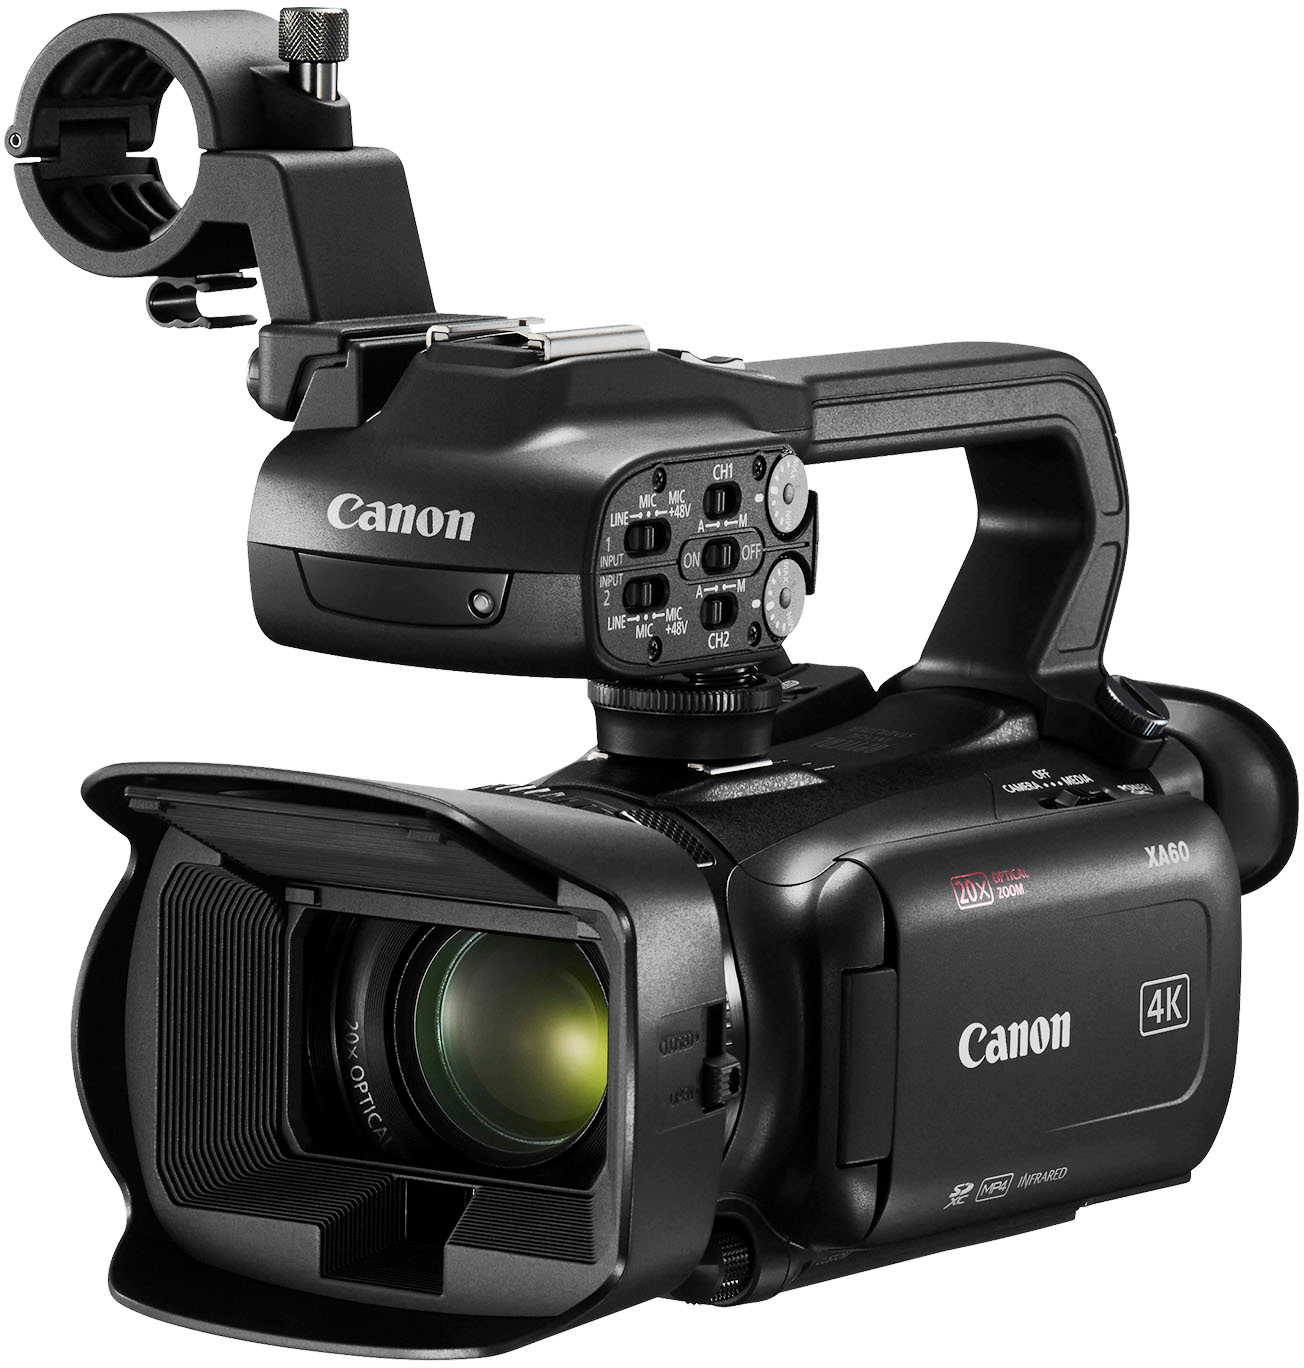 Angle View: Canon - XA60 Professional Camcorder - Black